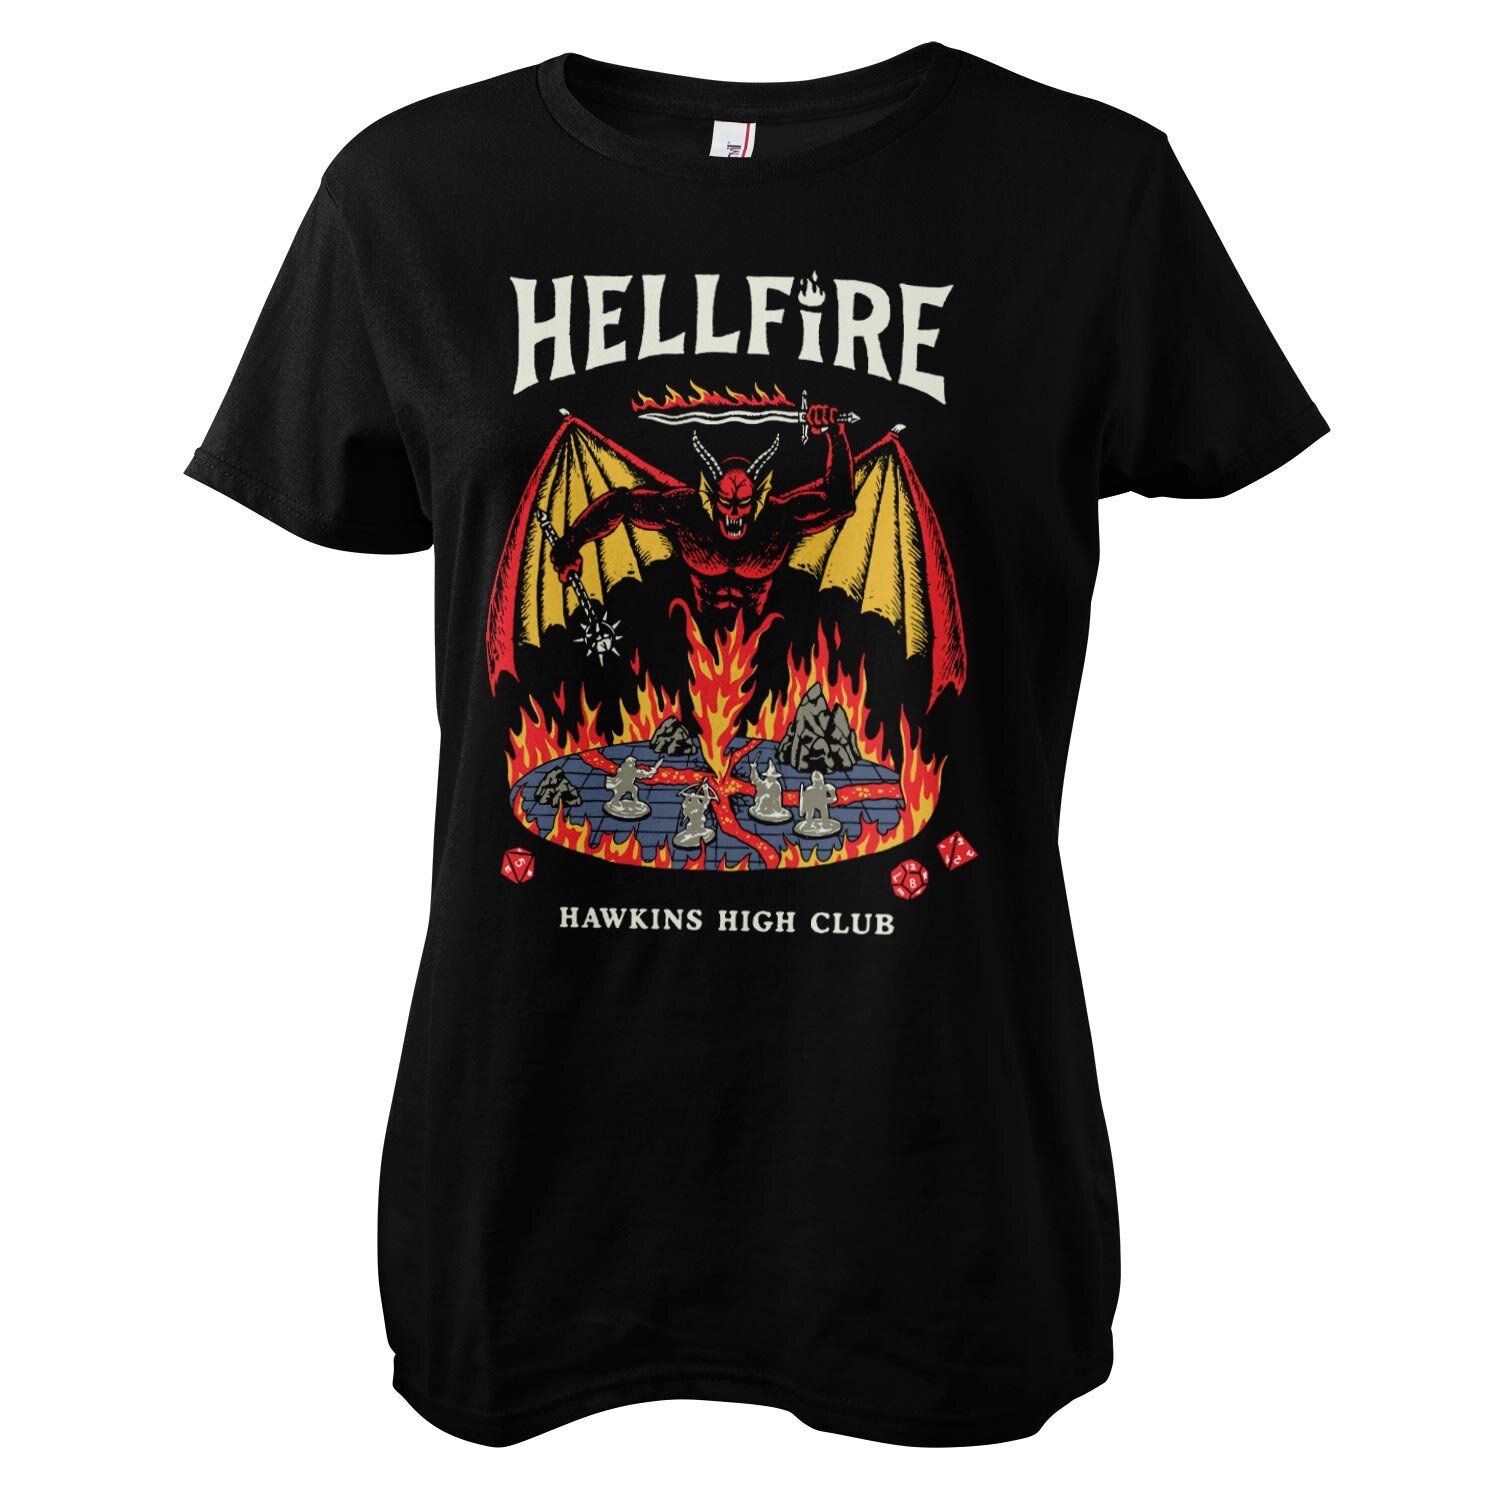 Hellfire Hawkins High Club Girly Tee